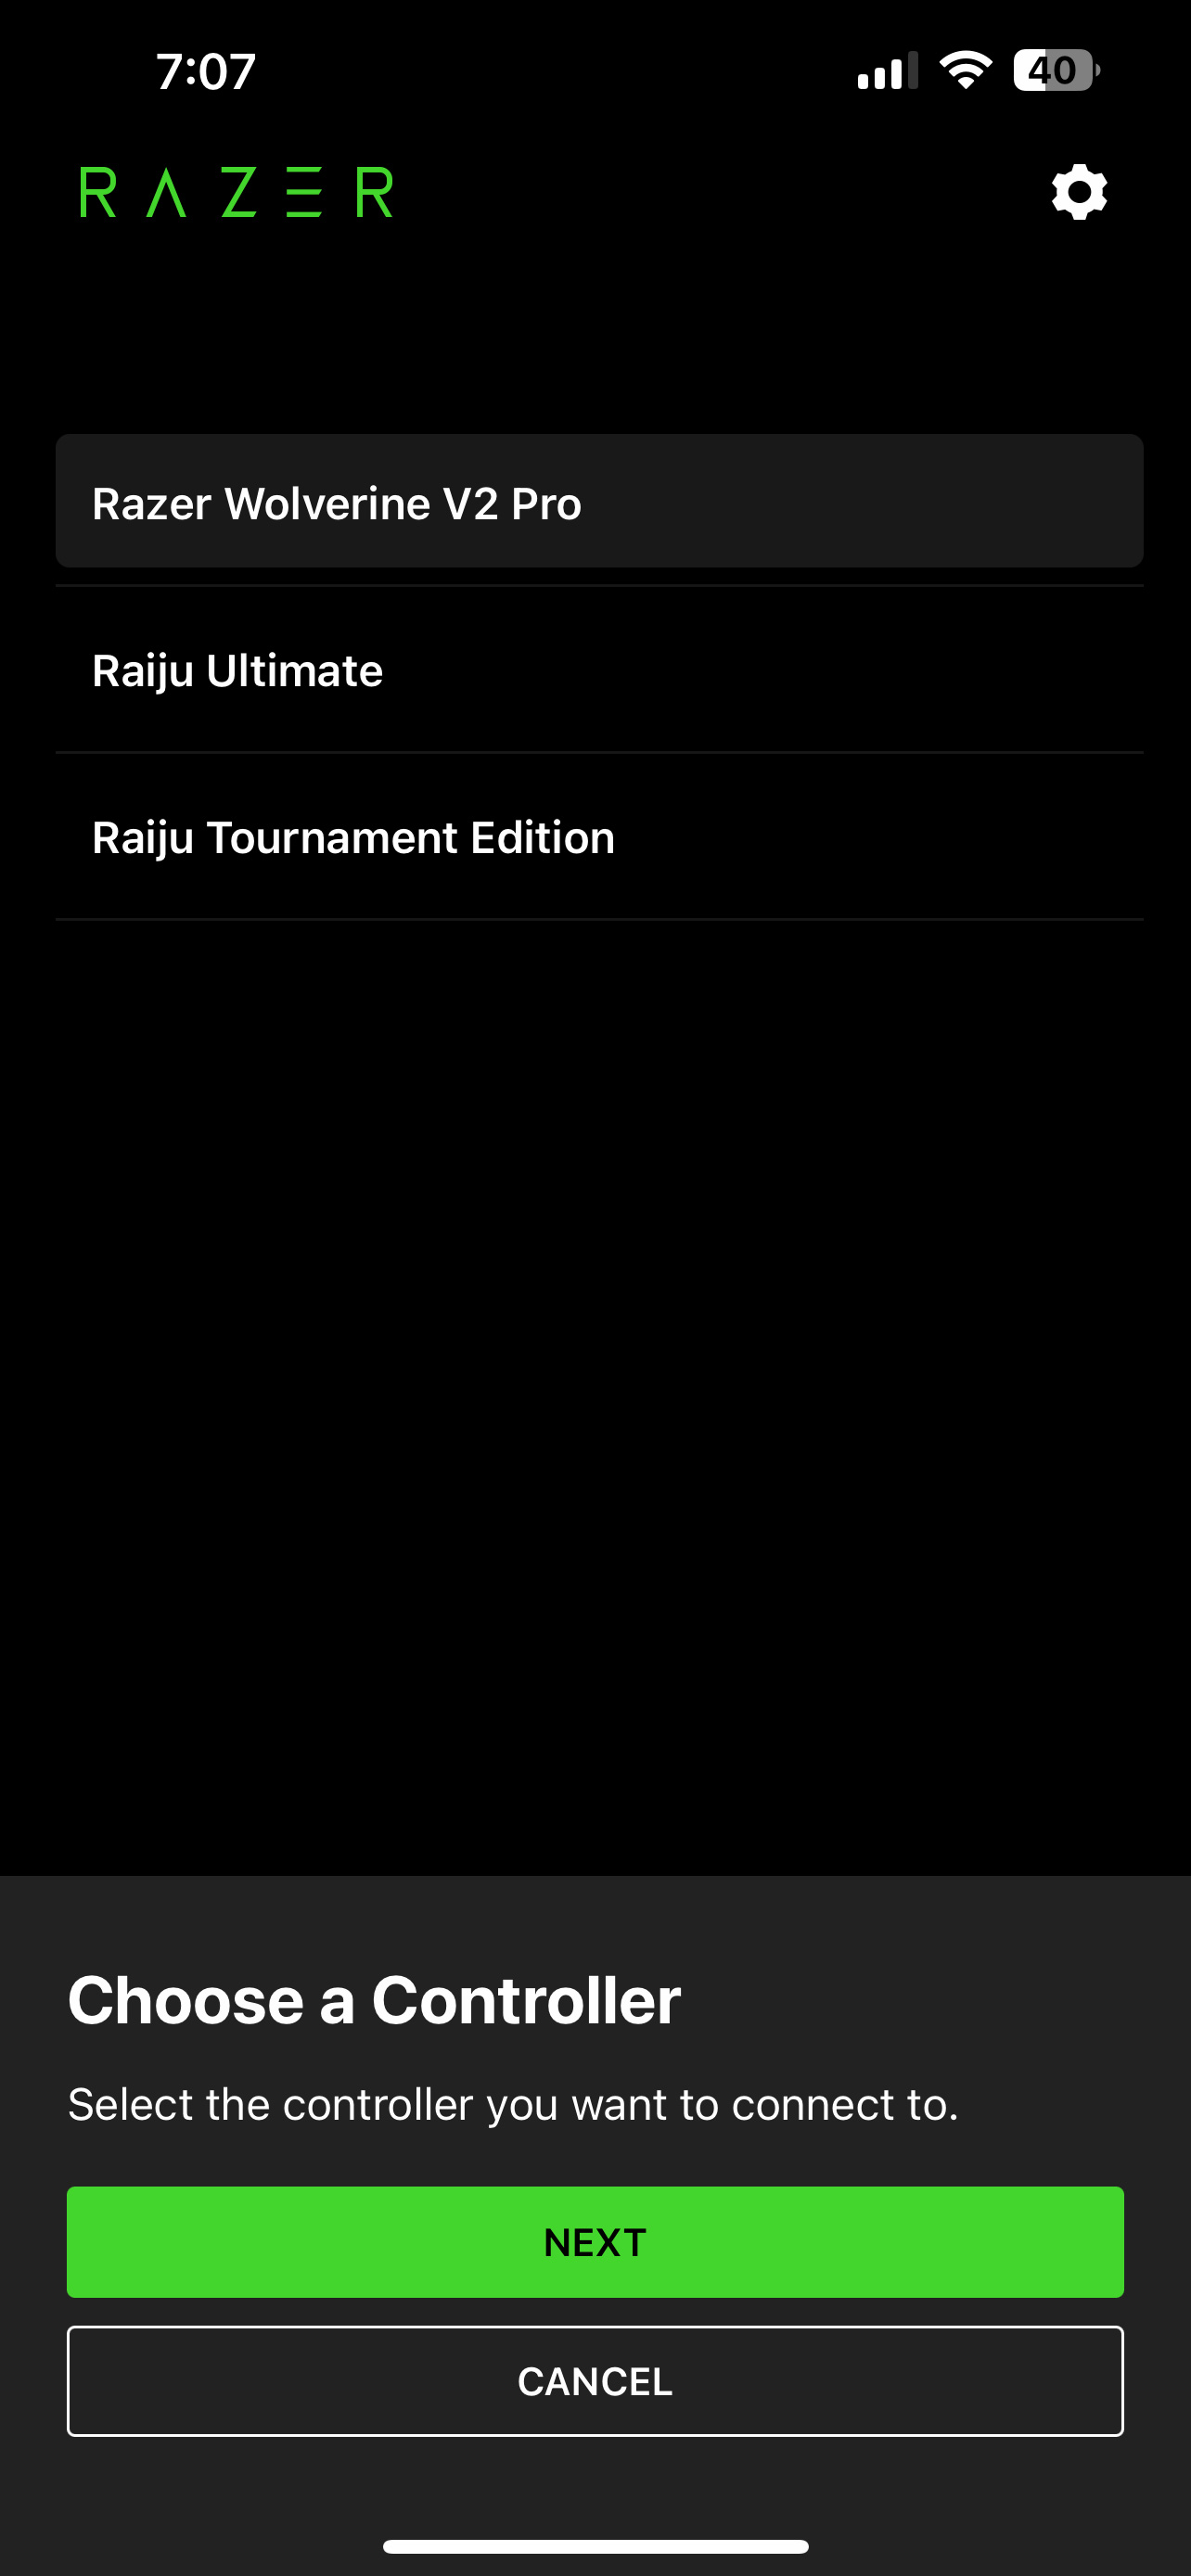 Razer Wolverine V2 Pro Controller App (2)